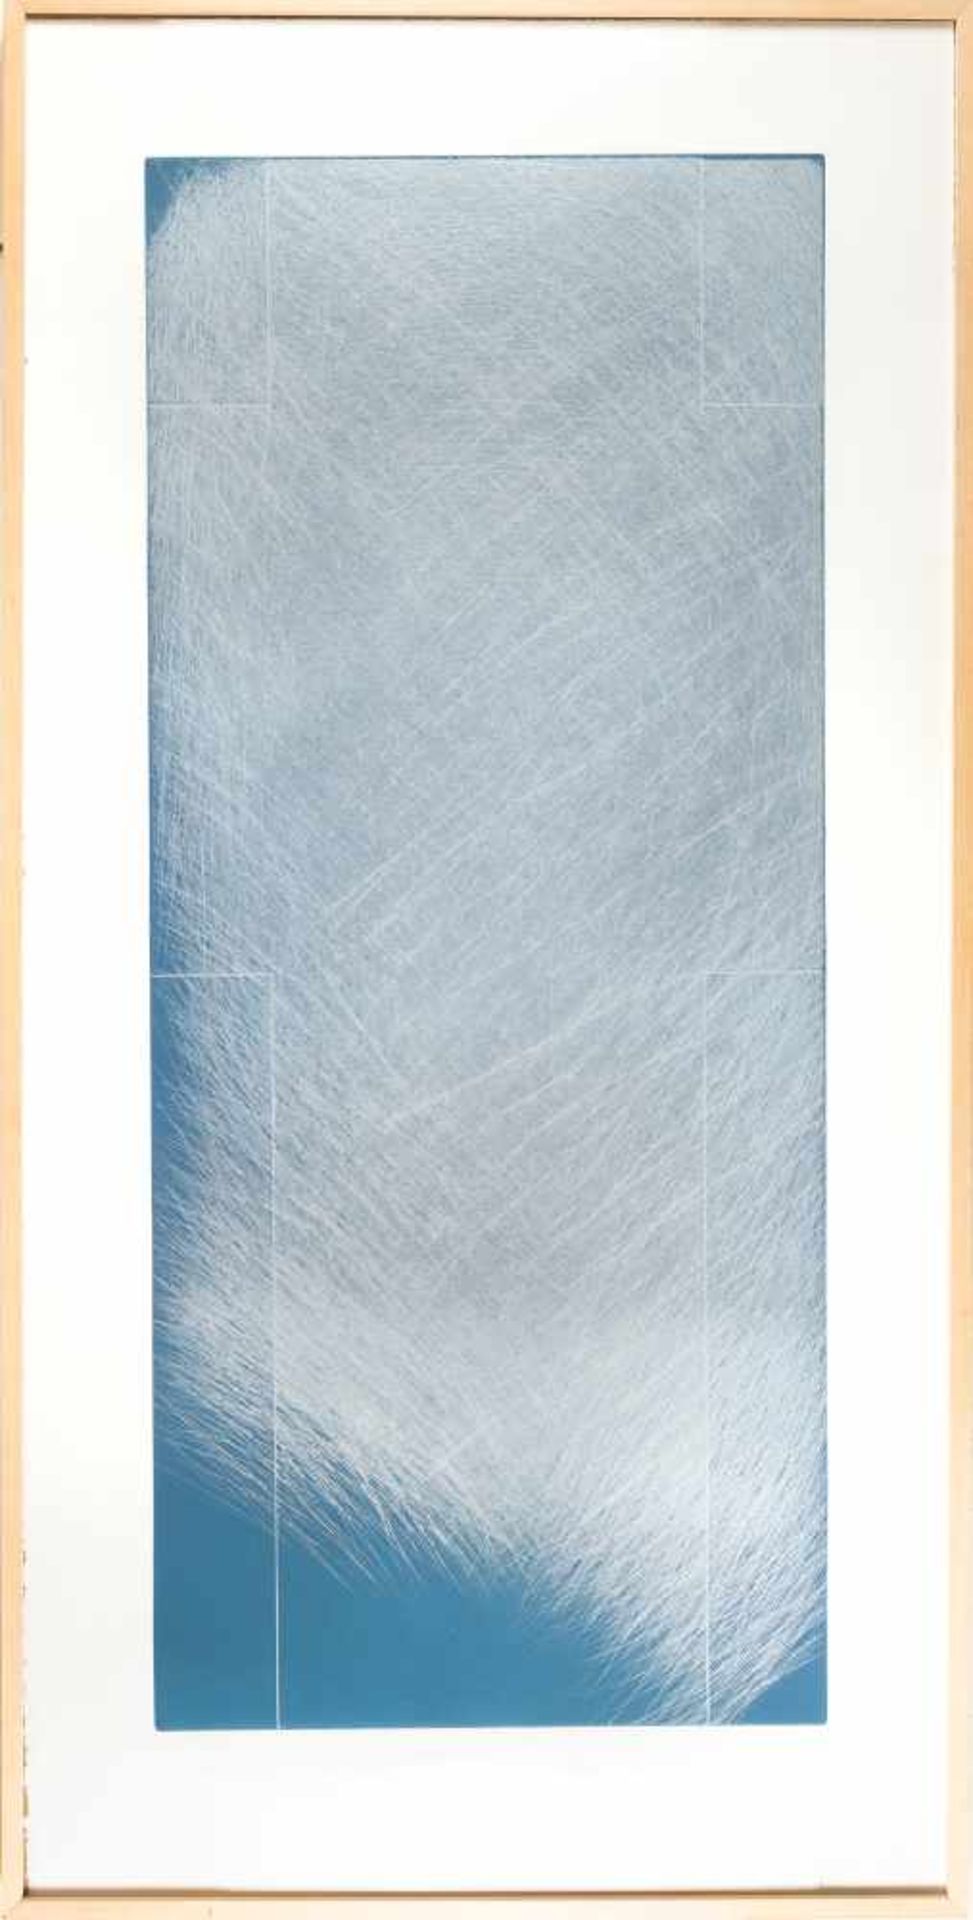 1929 Baden bei WienCross (grey/silver)Etching in colours on wove. C. 138 x 68 cm (sheet size). A